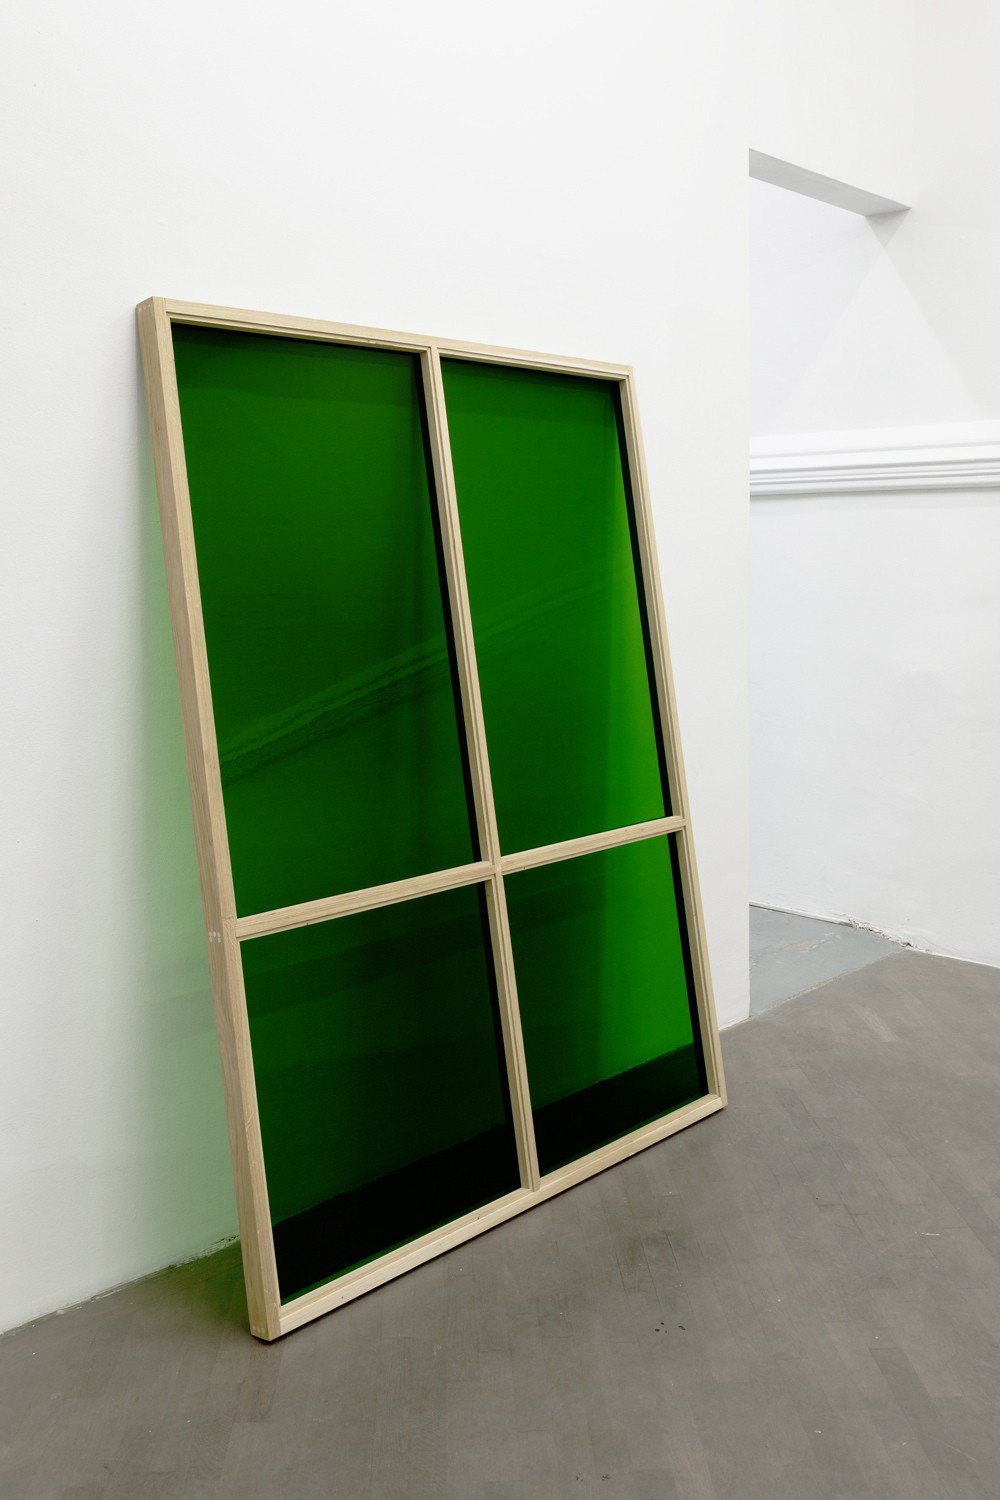 Marius EnghNero Window, 2013Stained green glass, oak frame200 x 150 x 6 cm